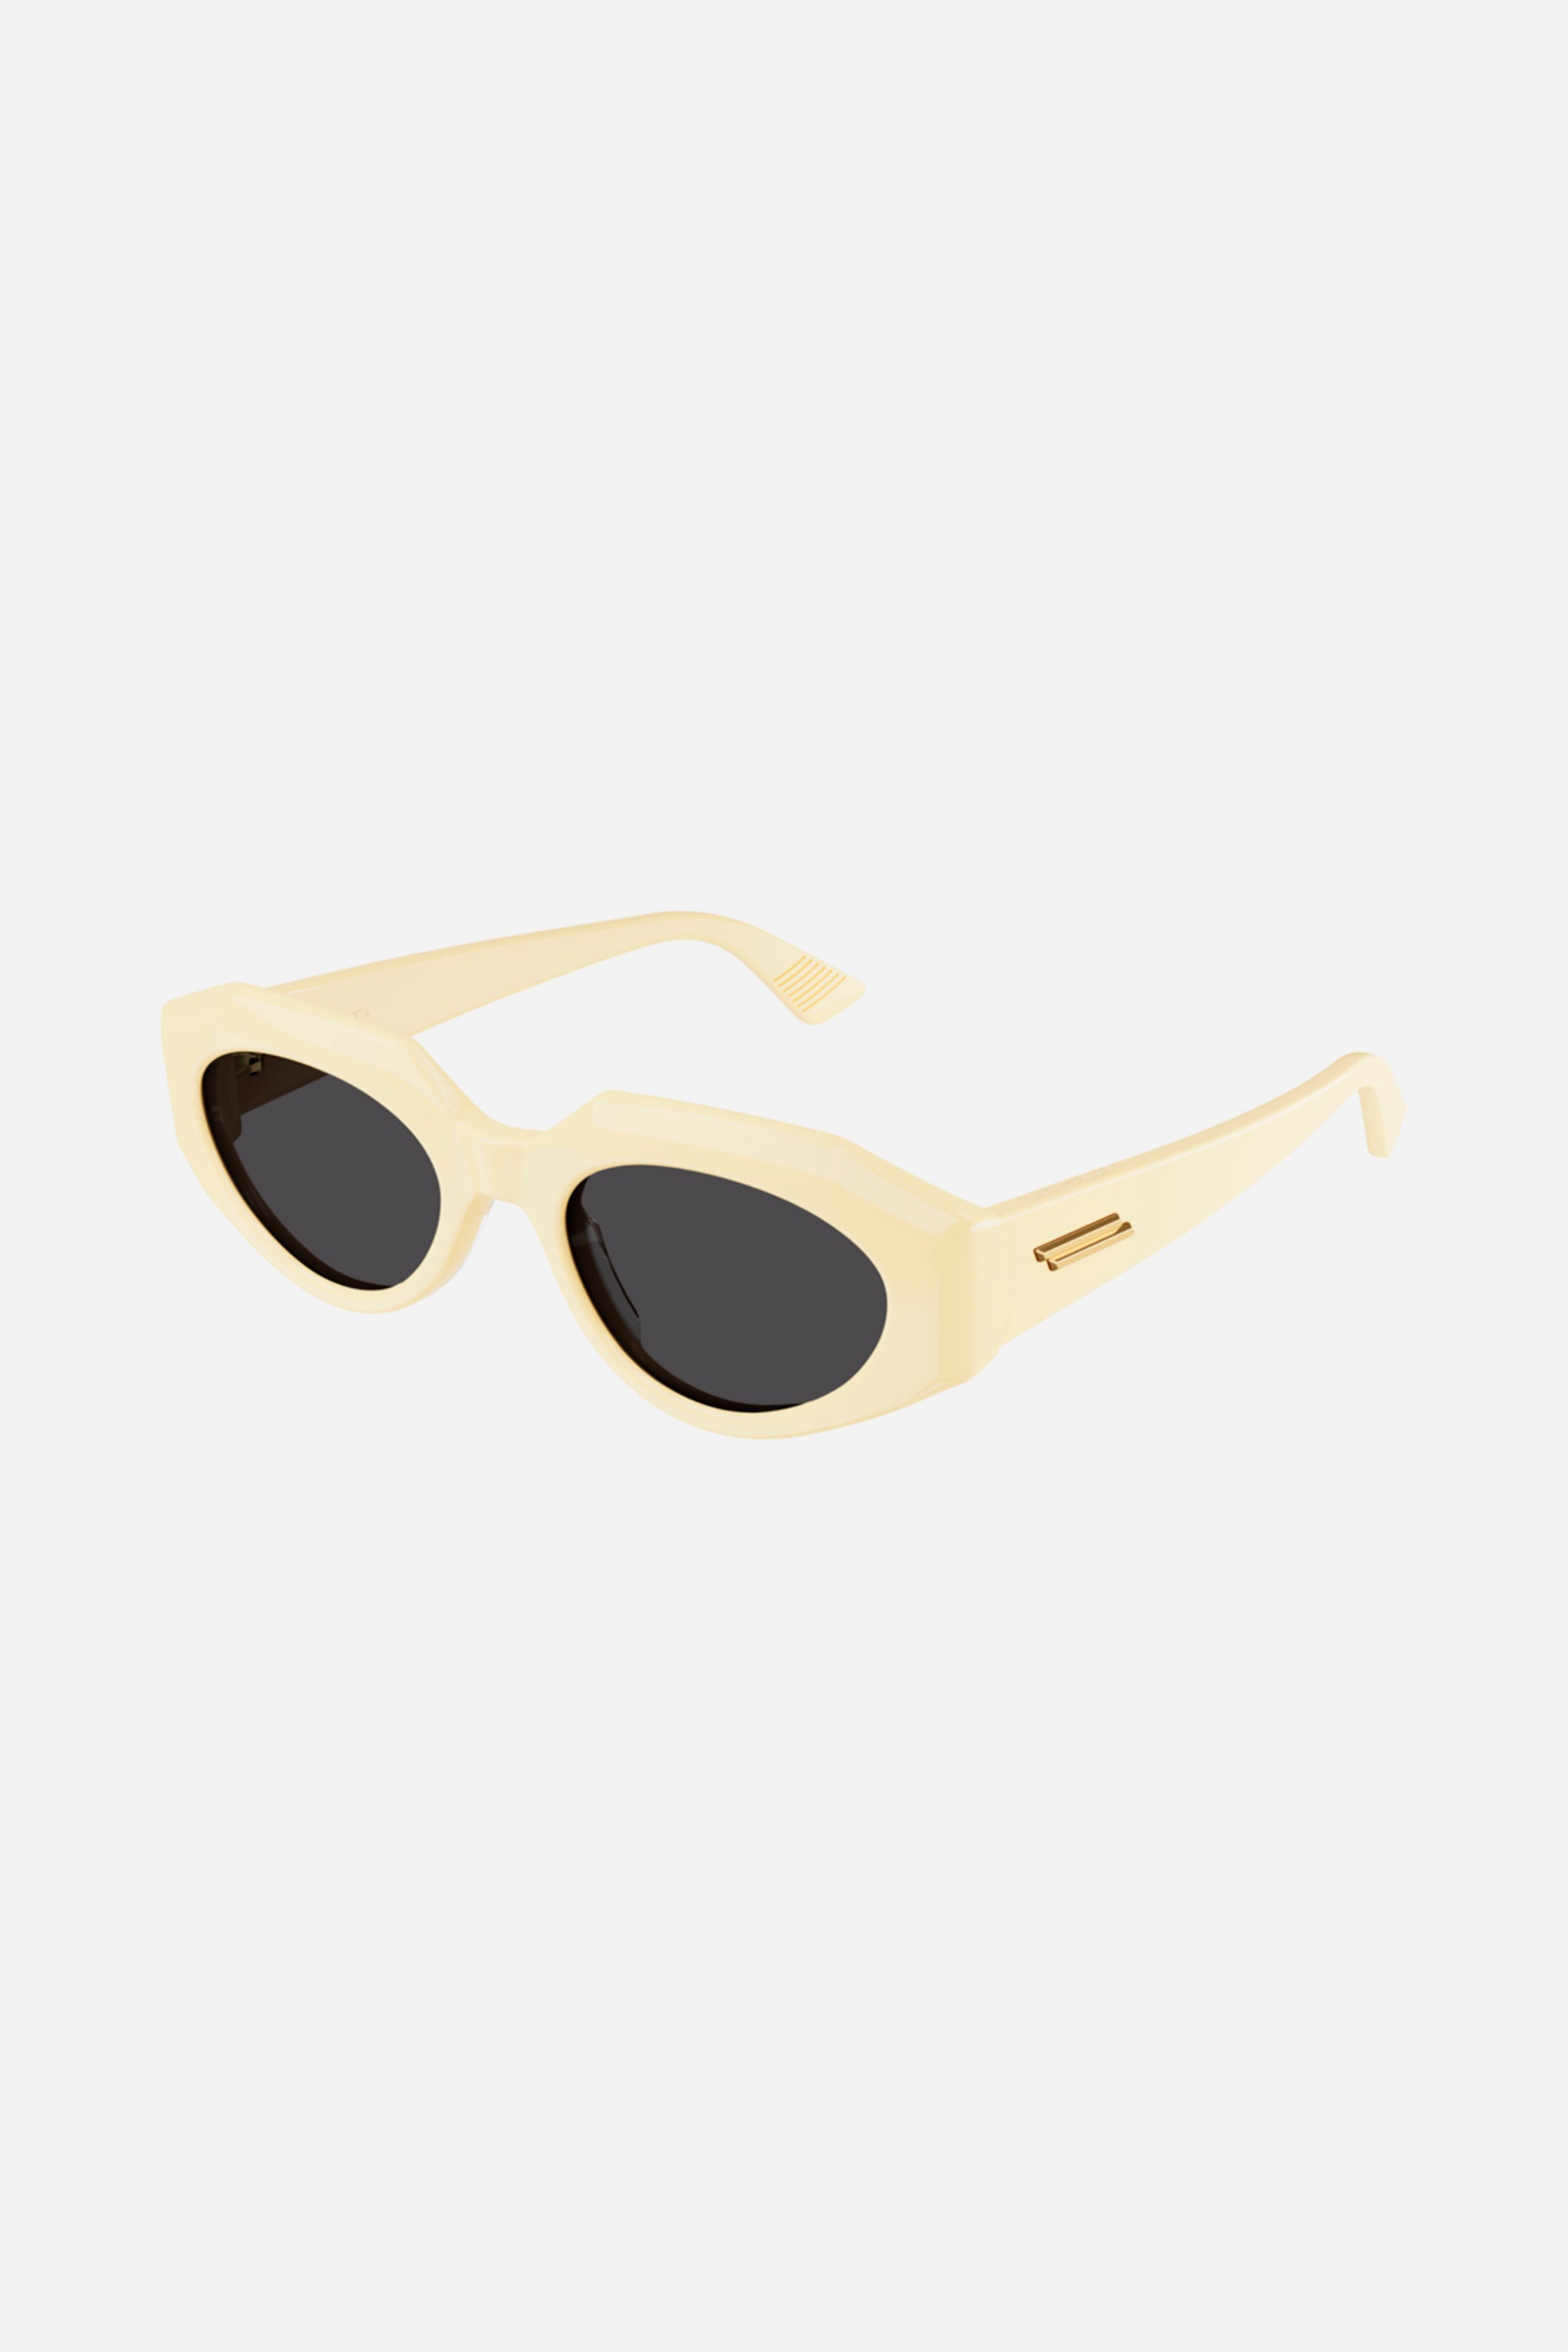 Bottega Veneta oval femenine ivory sunglasses - Eyewear Club